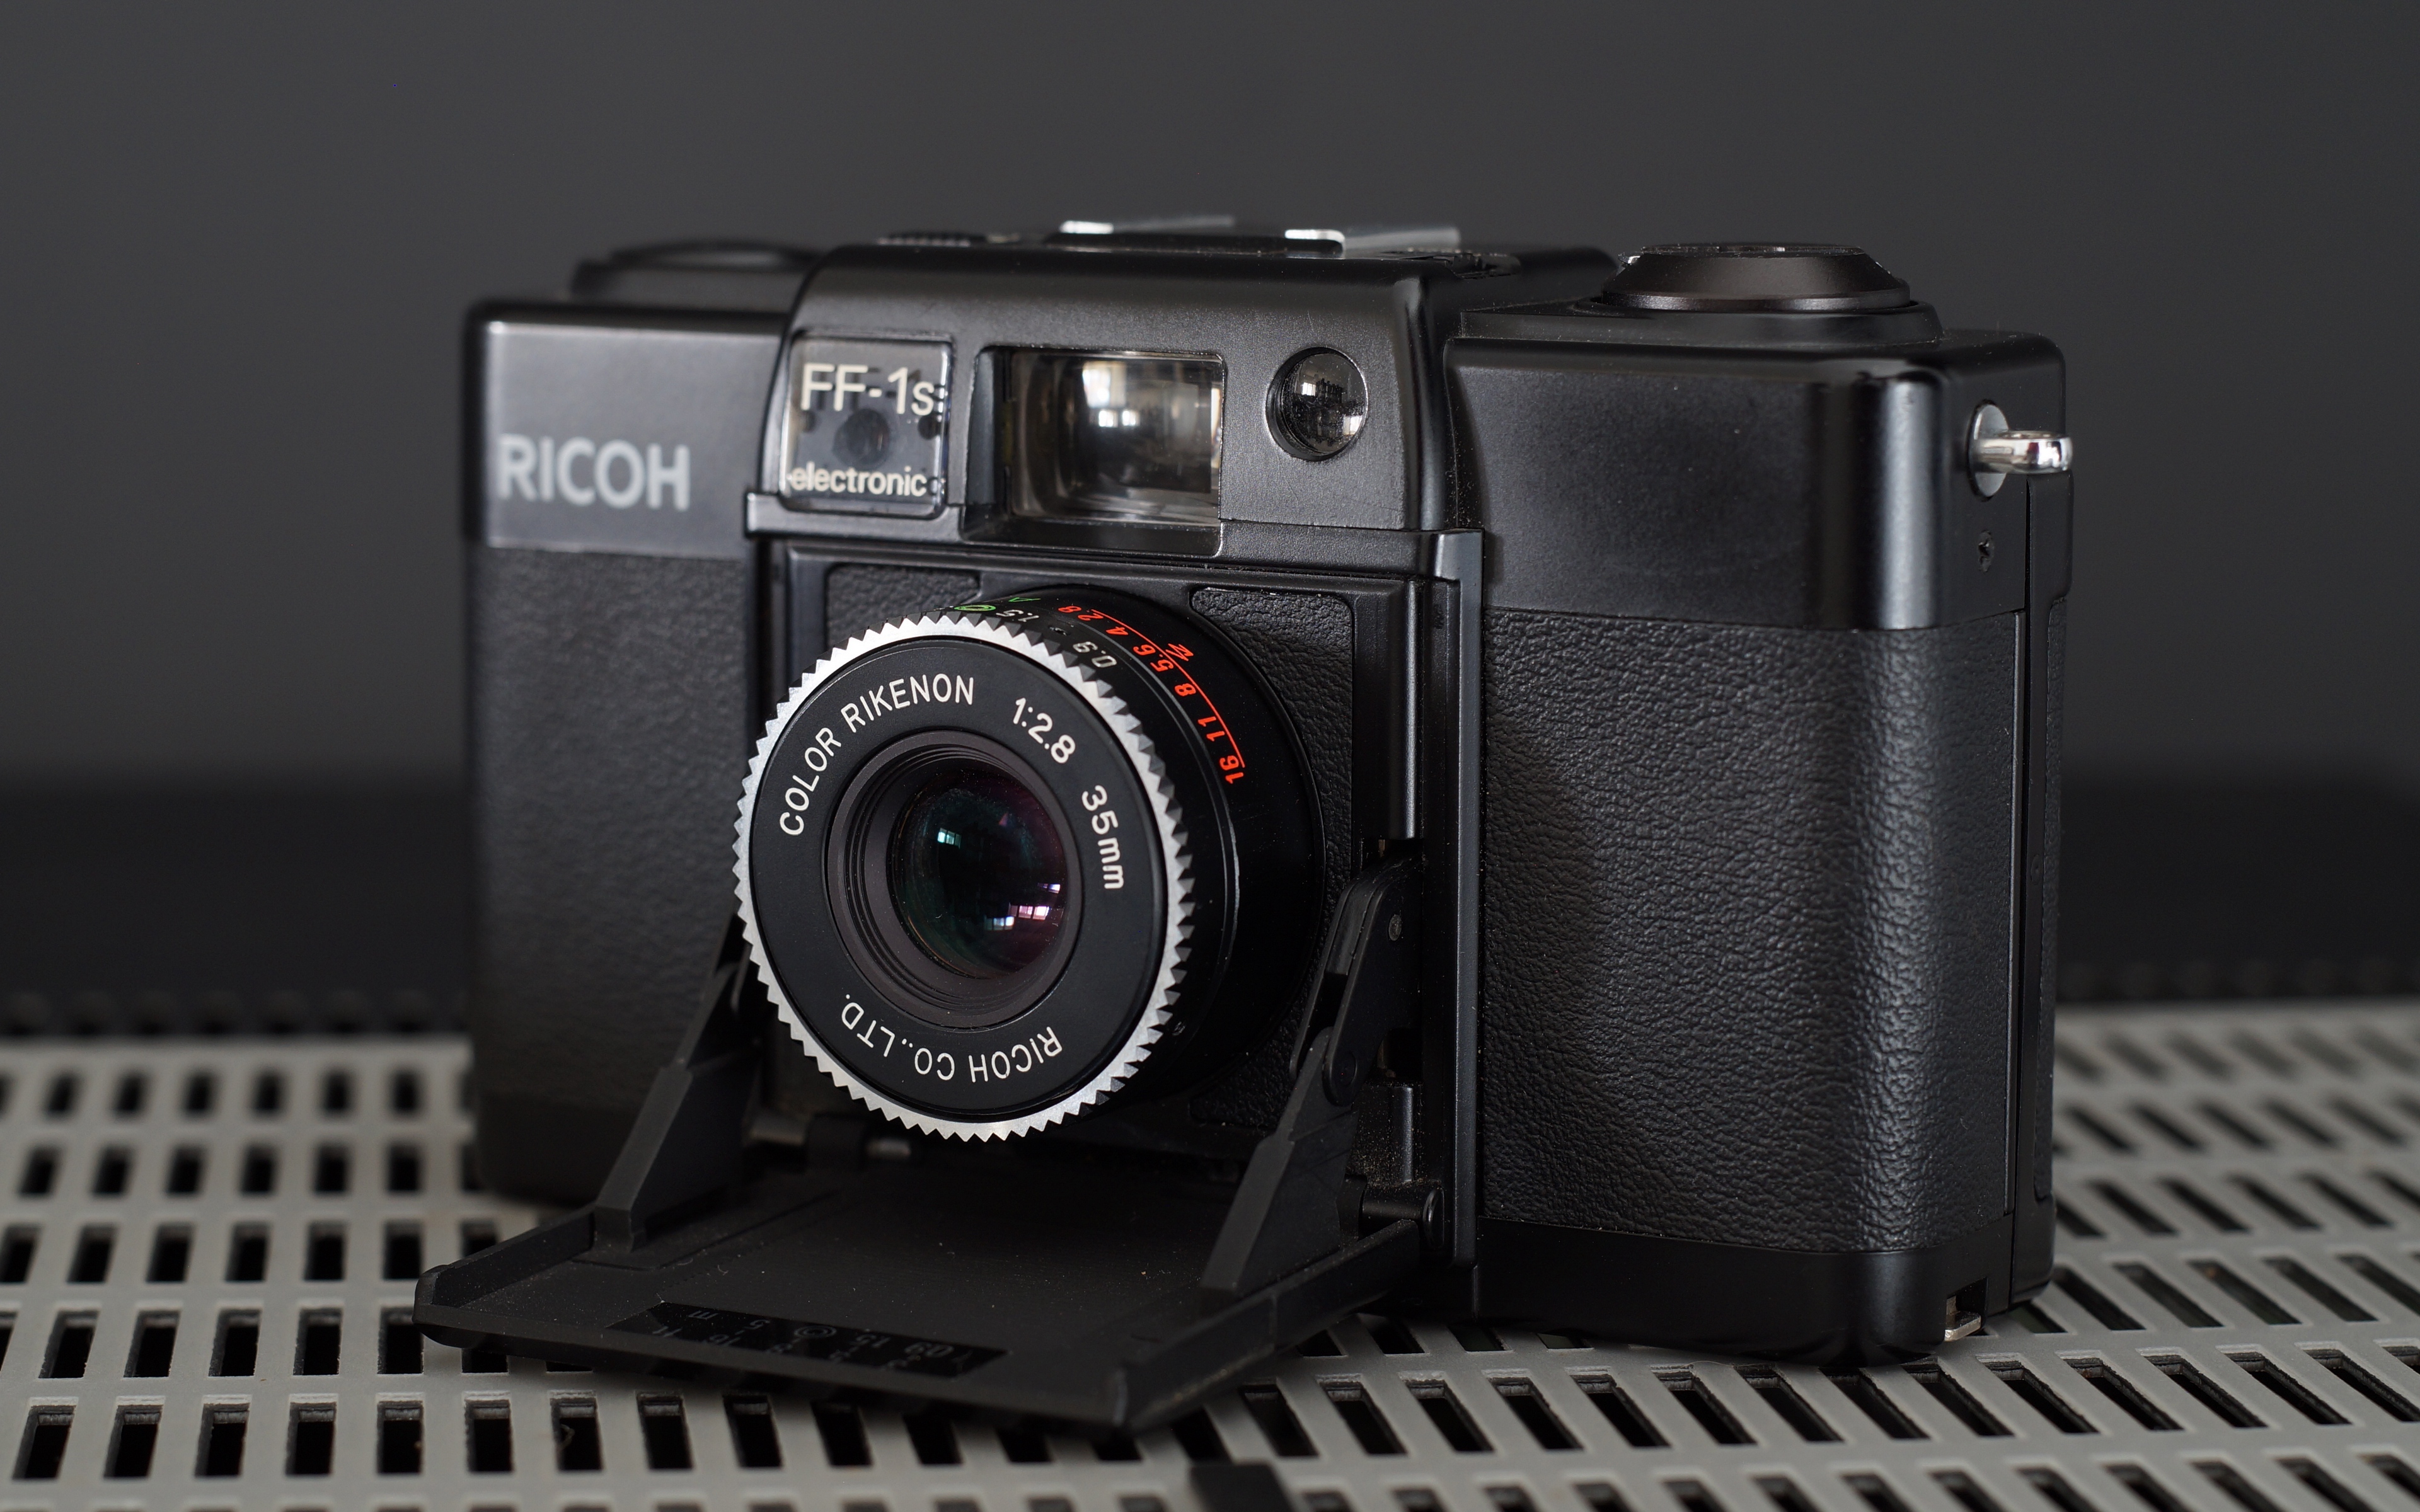 Wallpaper Ricoh Ff 1s Camera Lens 4k Ultra HD